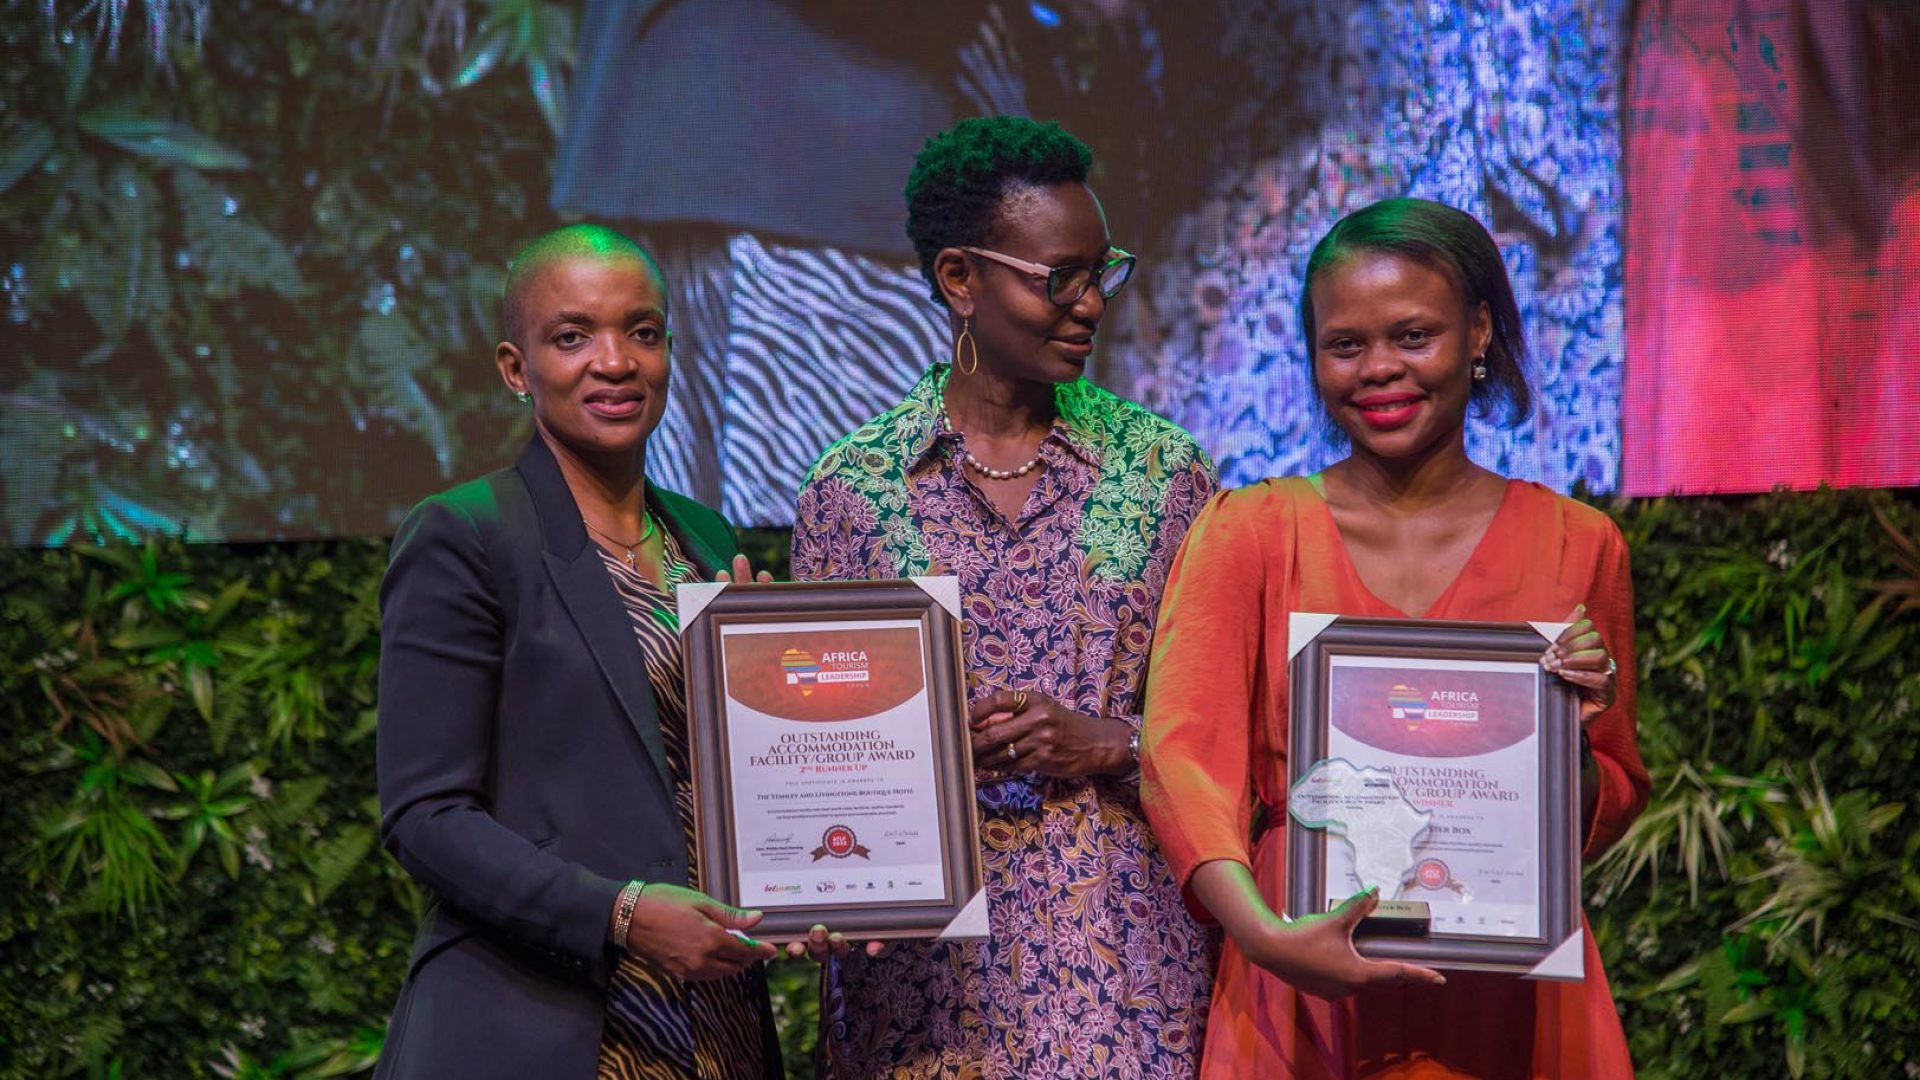 africa-tourism-leadership-awards-2022_52456736341_o